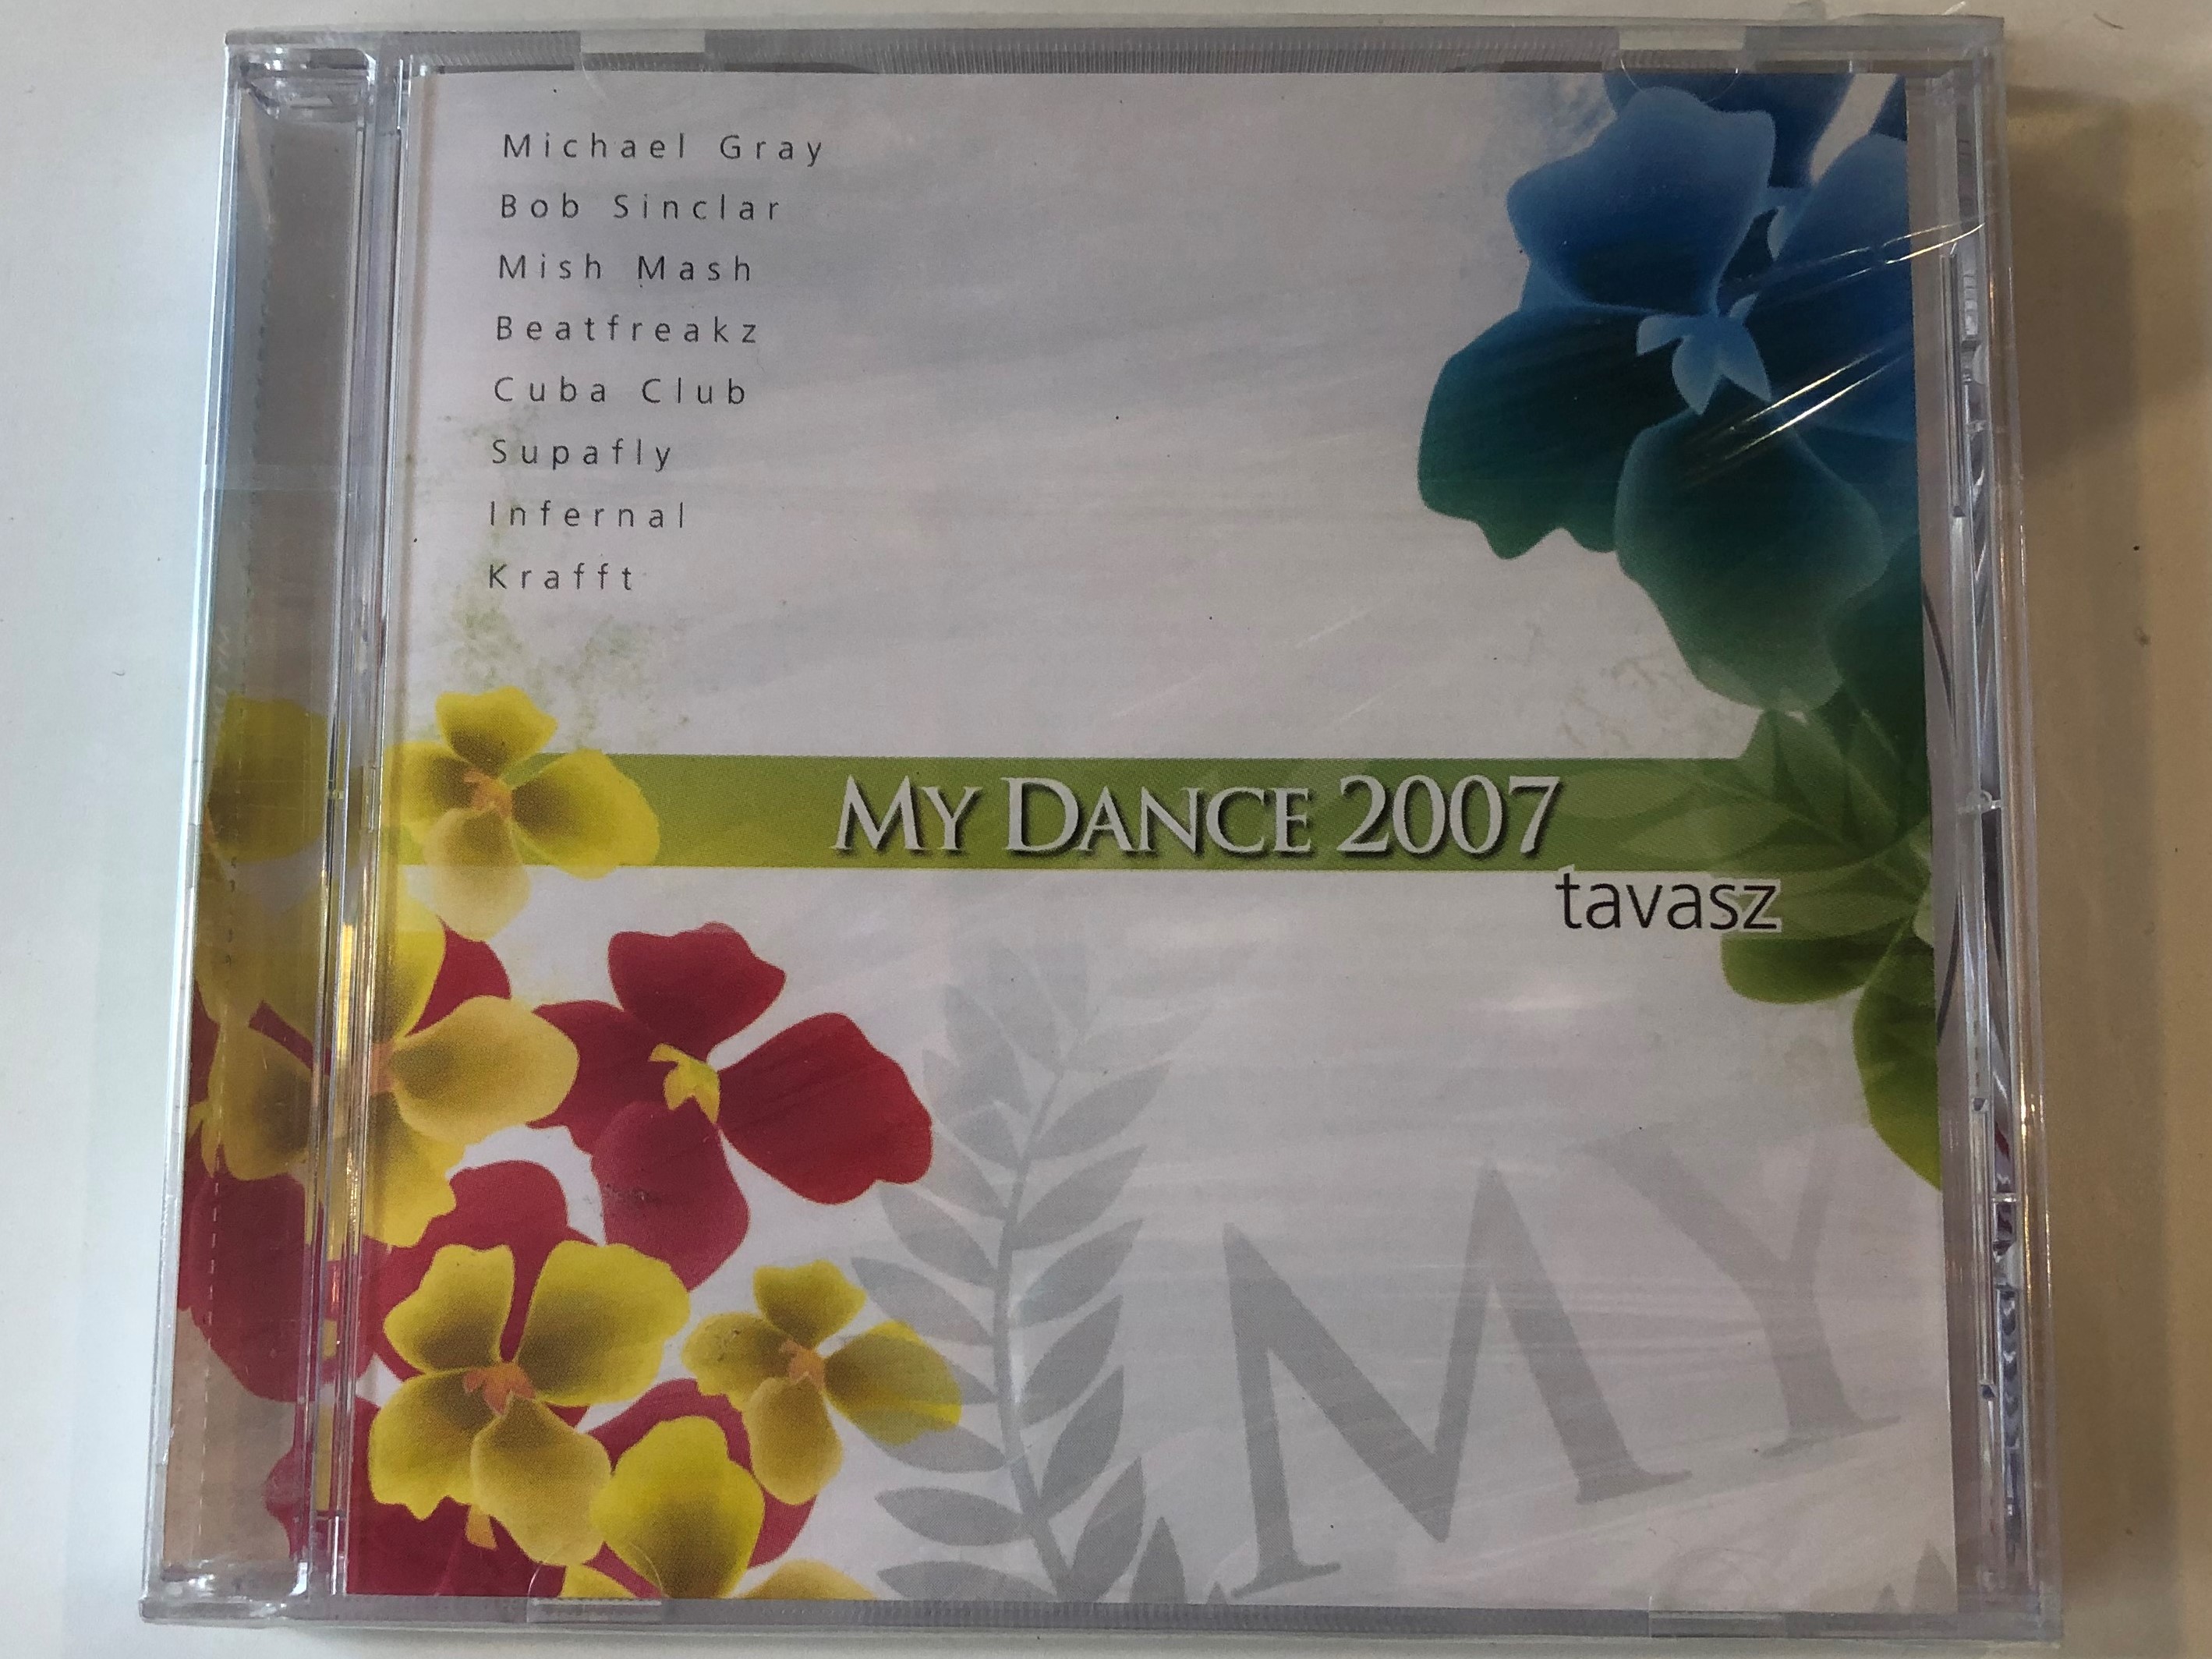 my-dance-2007-tavasz-michael-gray-bob-sinclar-mish-mash-beatfreakz-cuba-club-supafly-infernal-krafft-cls-audio-cd-2007-cls-sa101-2-1-.jpg